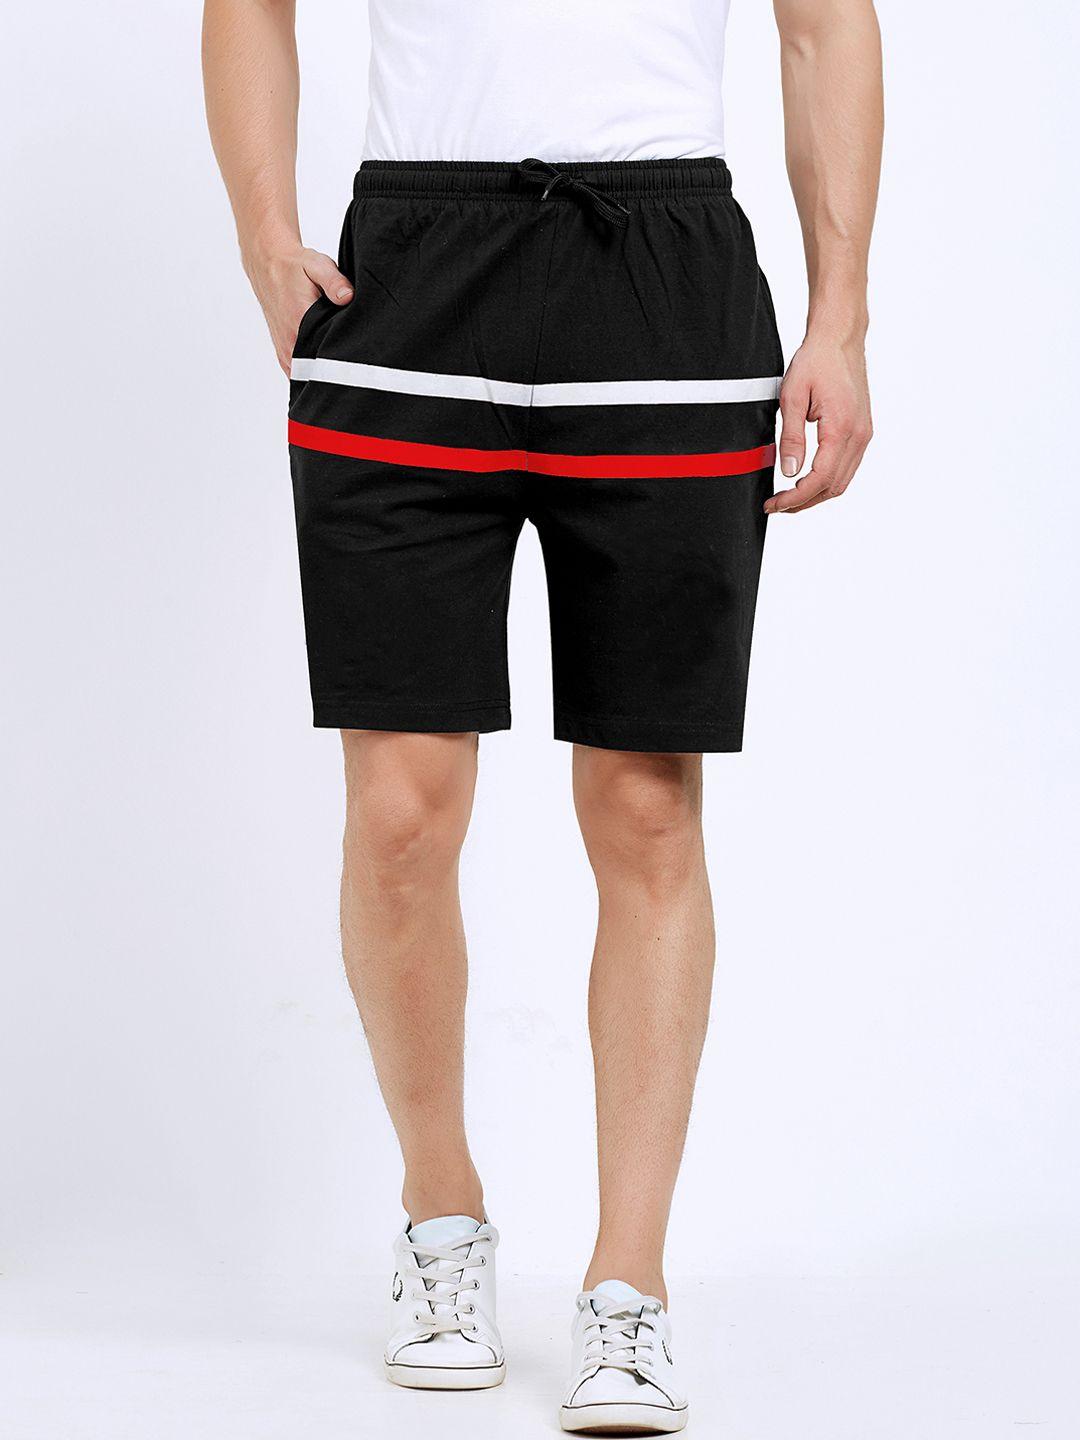 maniac-men-black-&-red-striped-slim-fit-regular-shorts